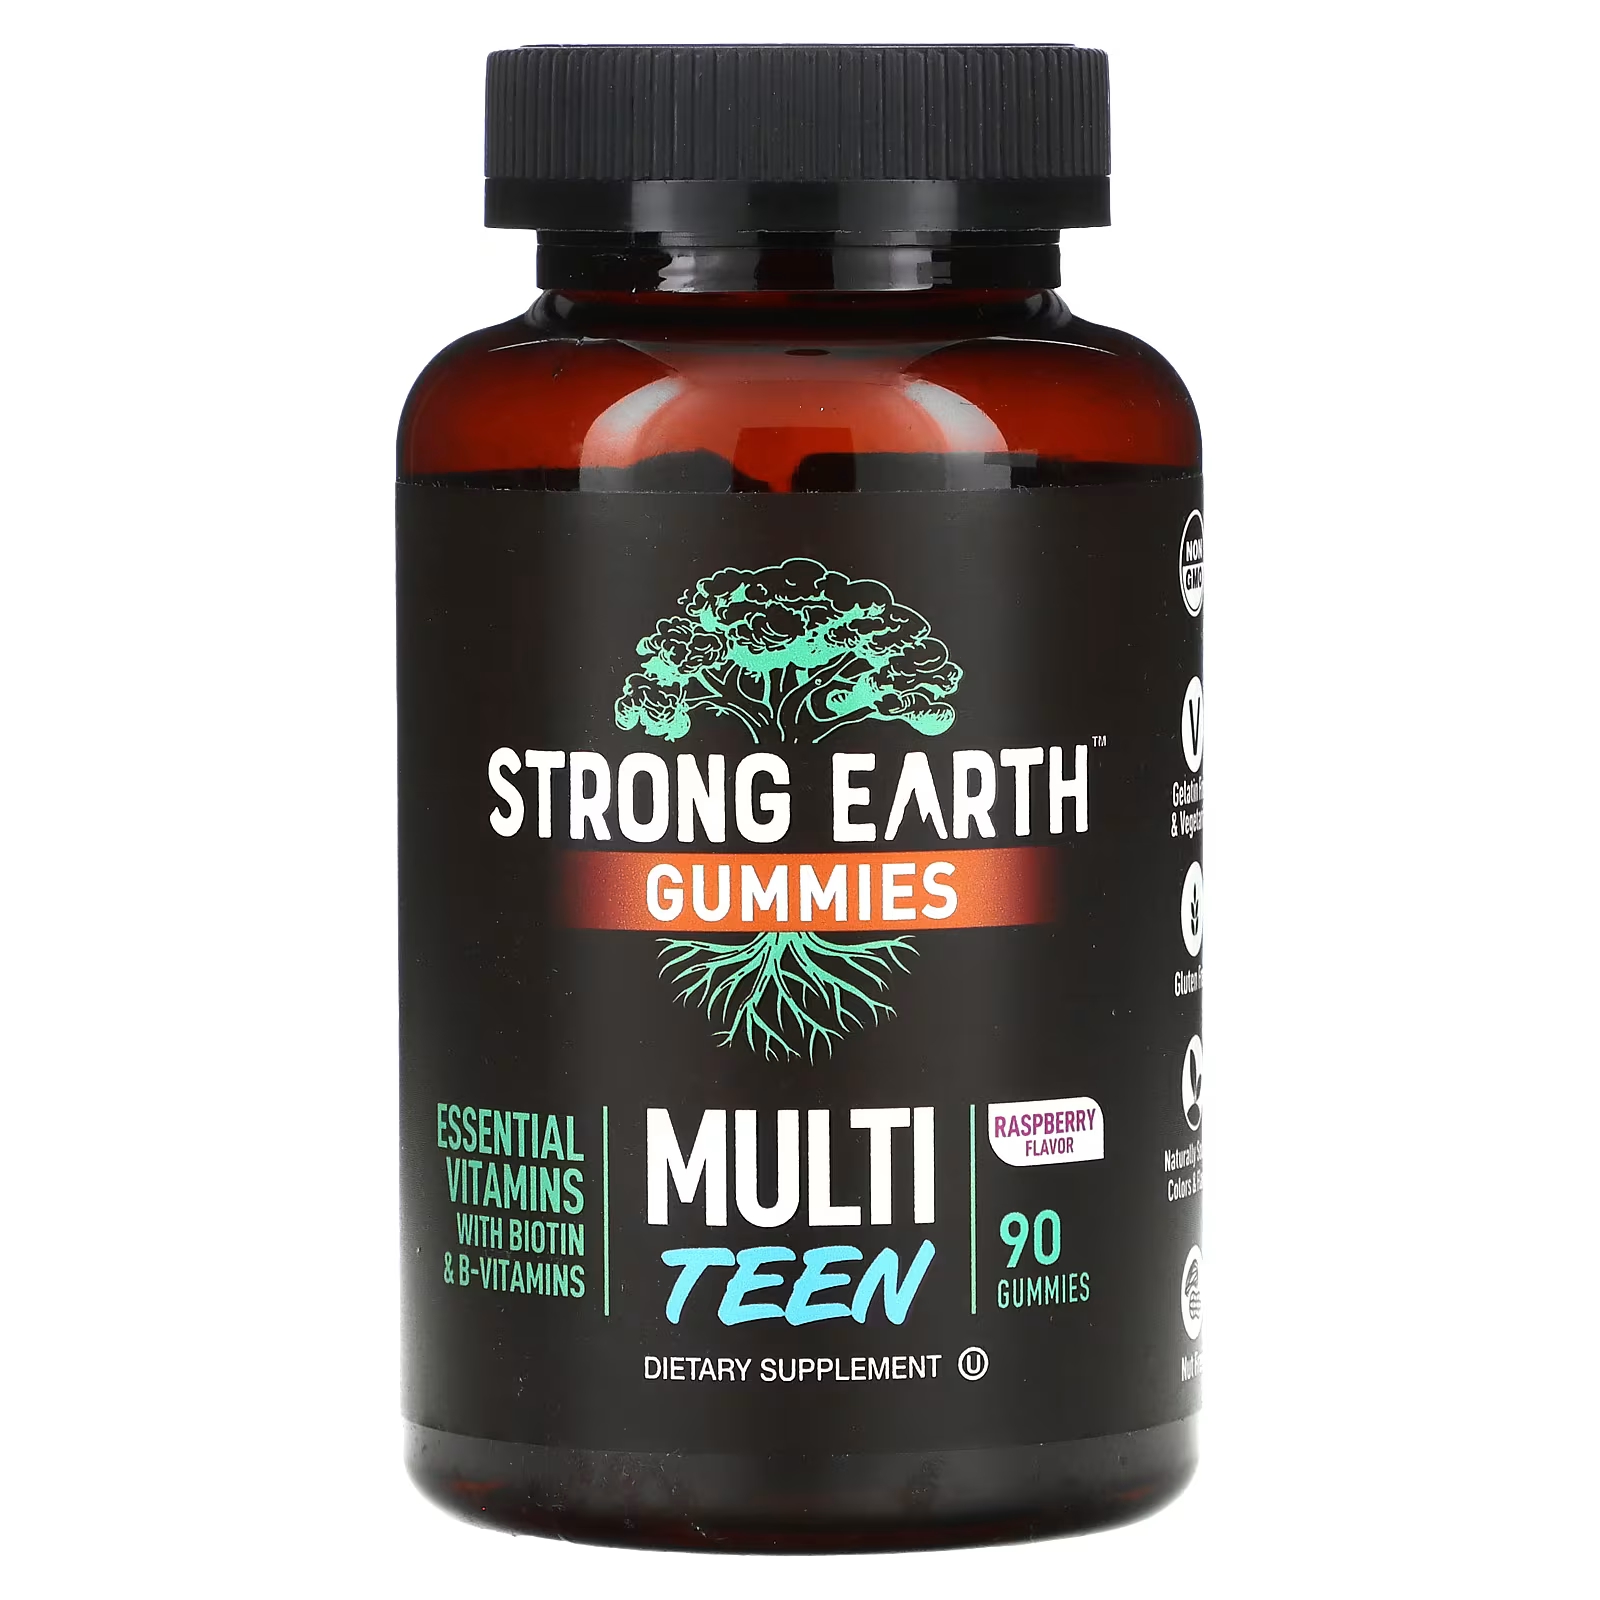 Пищевая добавка YumV's Strong Earth Gummies Multi Teen Raspberry, 90 жевательных конфет